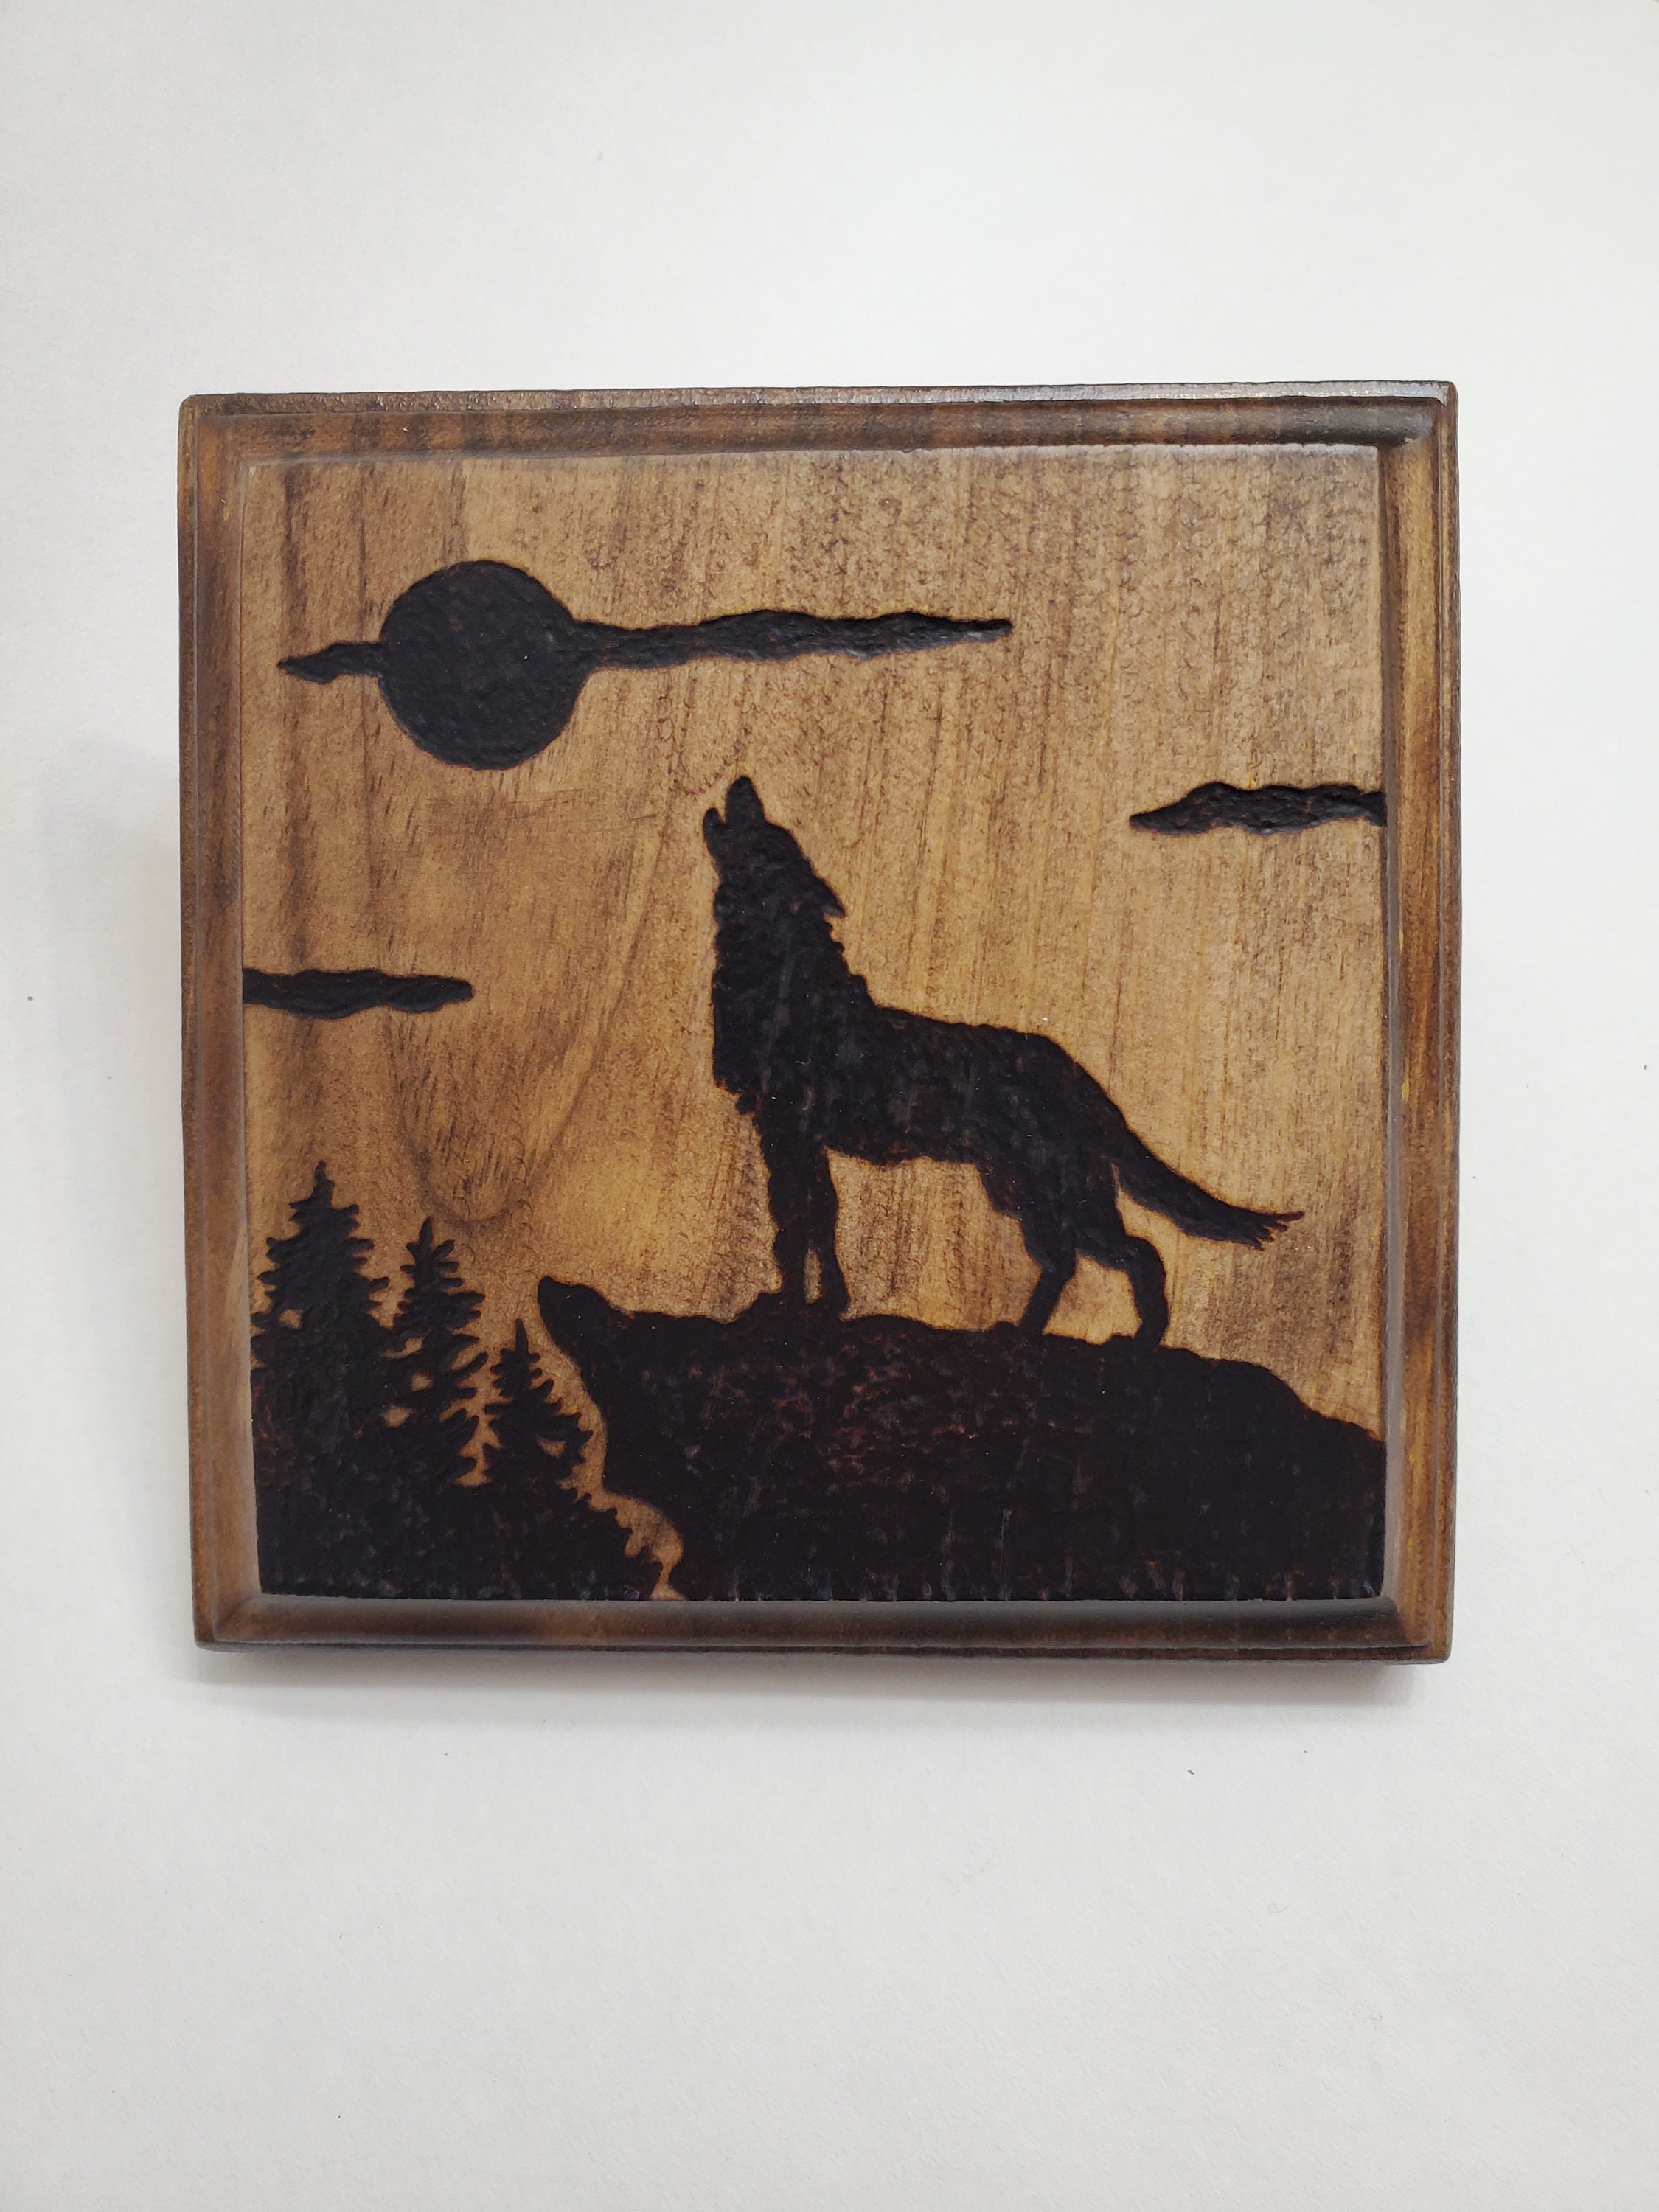 Lumberjack Tools® Wood Burning Stencil - Wolf